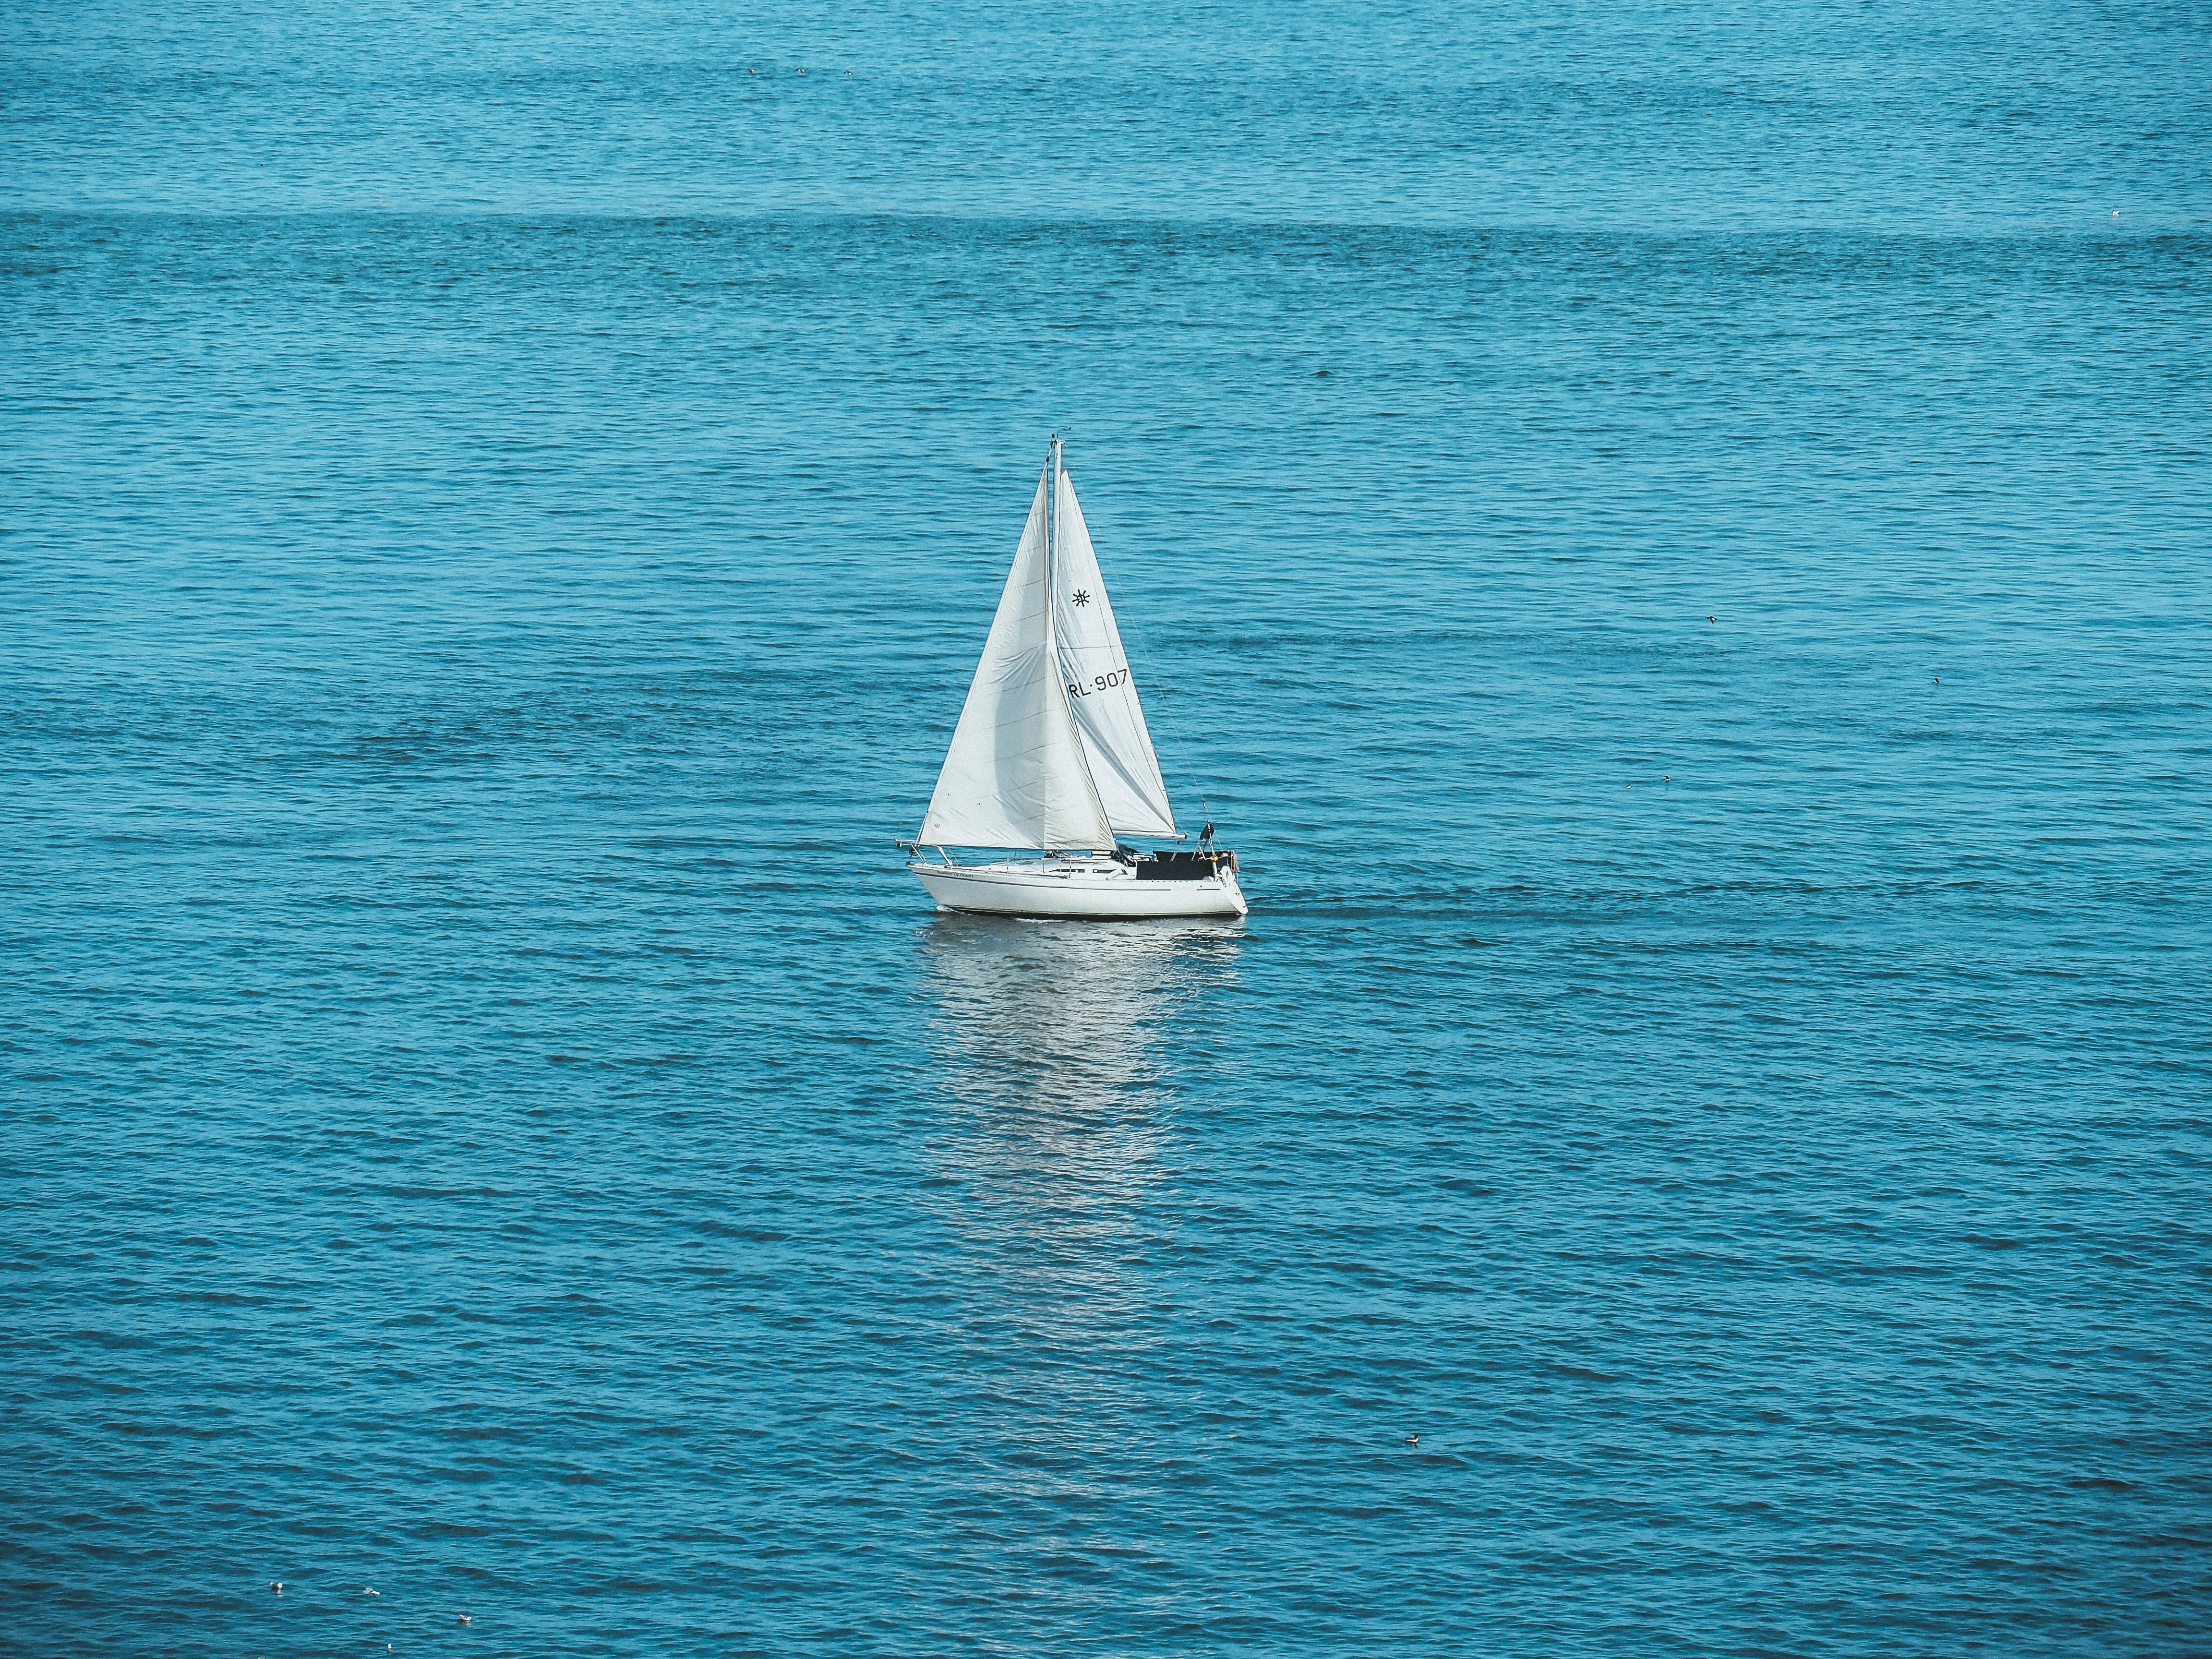 android boat, sailboat, water, sea, miscellanea, miscellaneous, sailfish